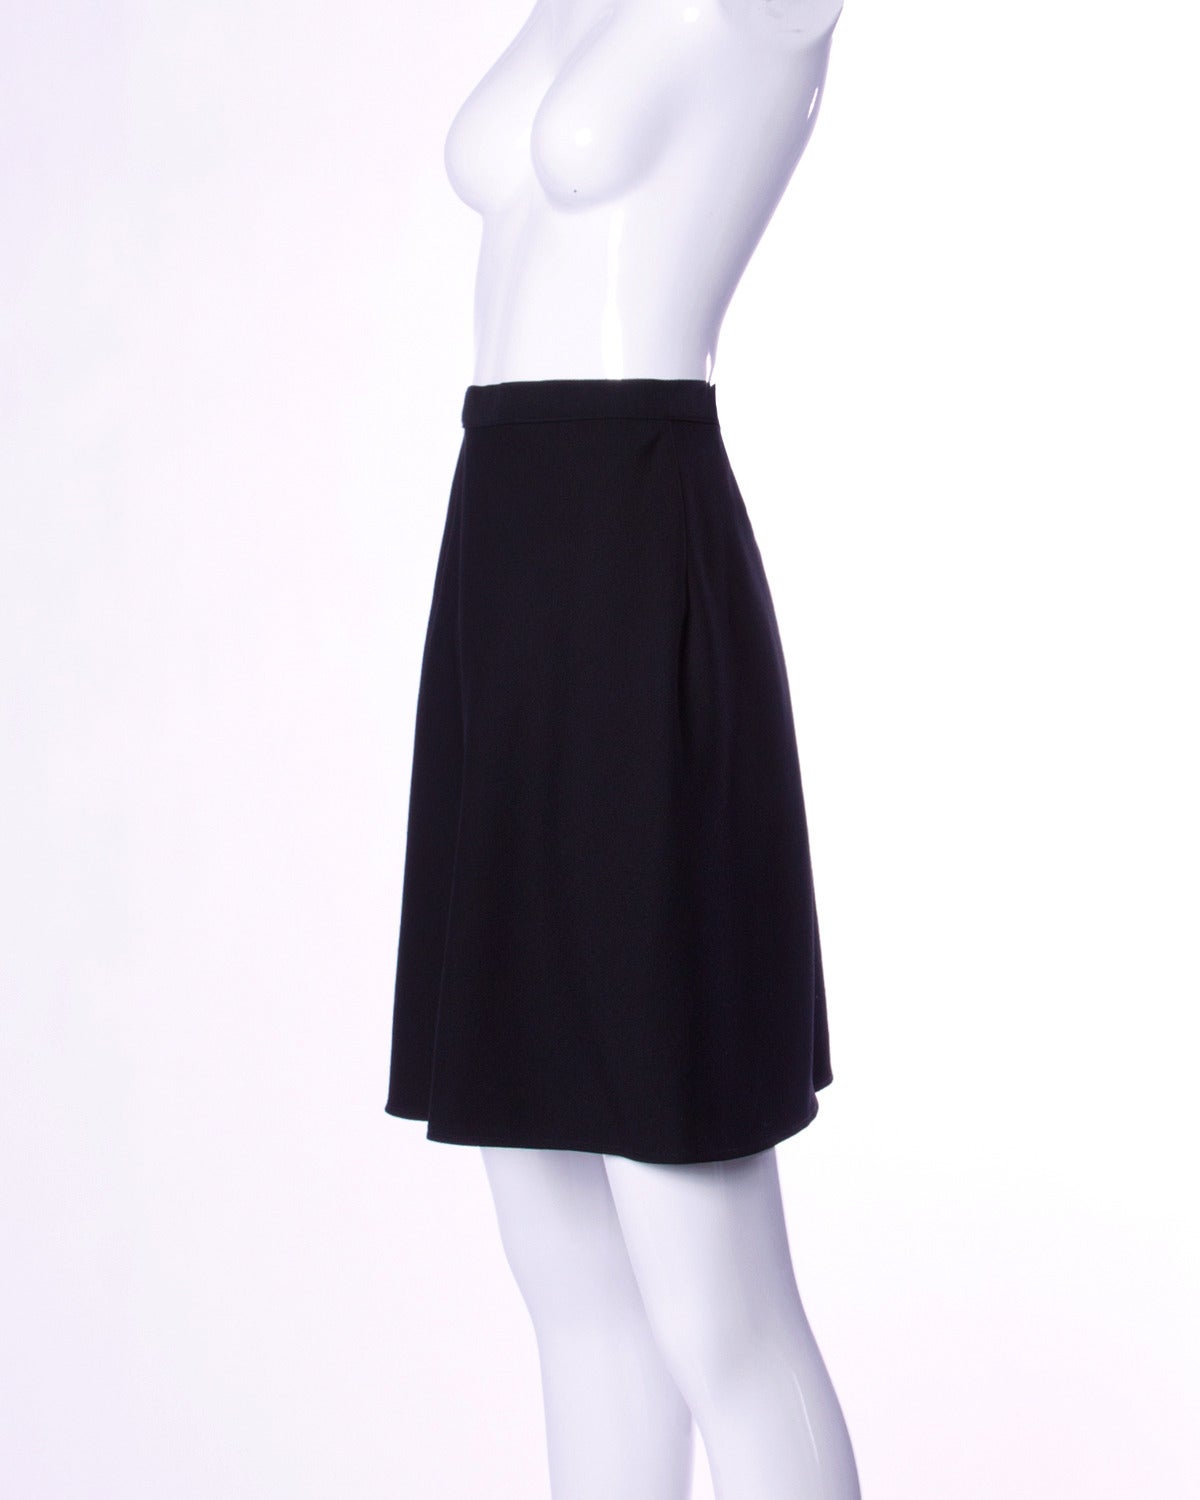 Women's Karl Lagerfeld Vintage 1990s 90s Black Wool Skirt with Back Detail